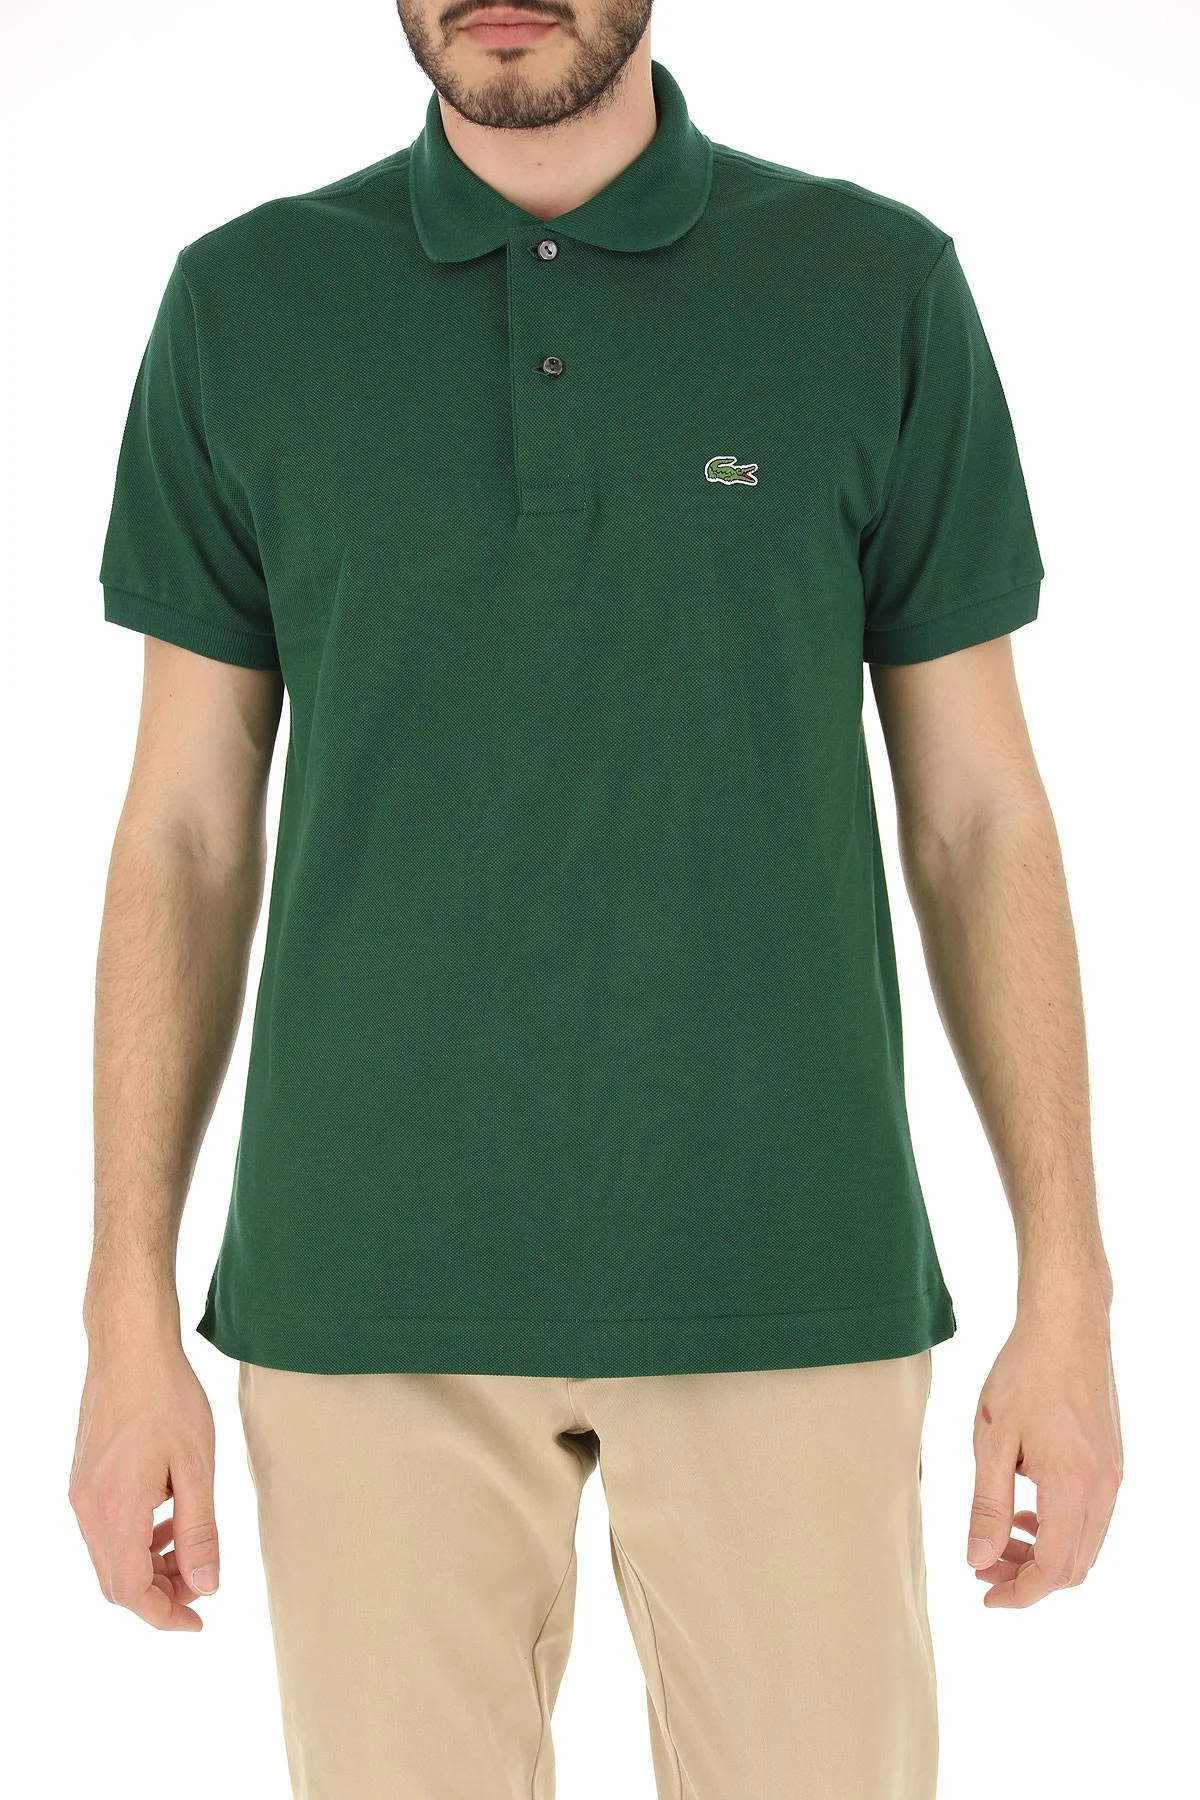 Lacoste Appalachan Green L1212 custom logo polo shirts